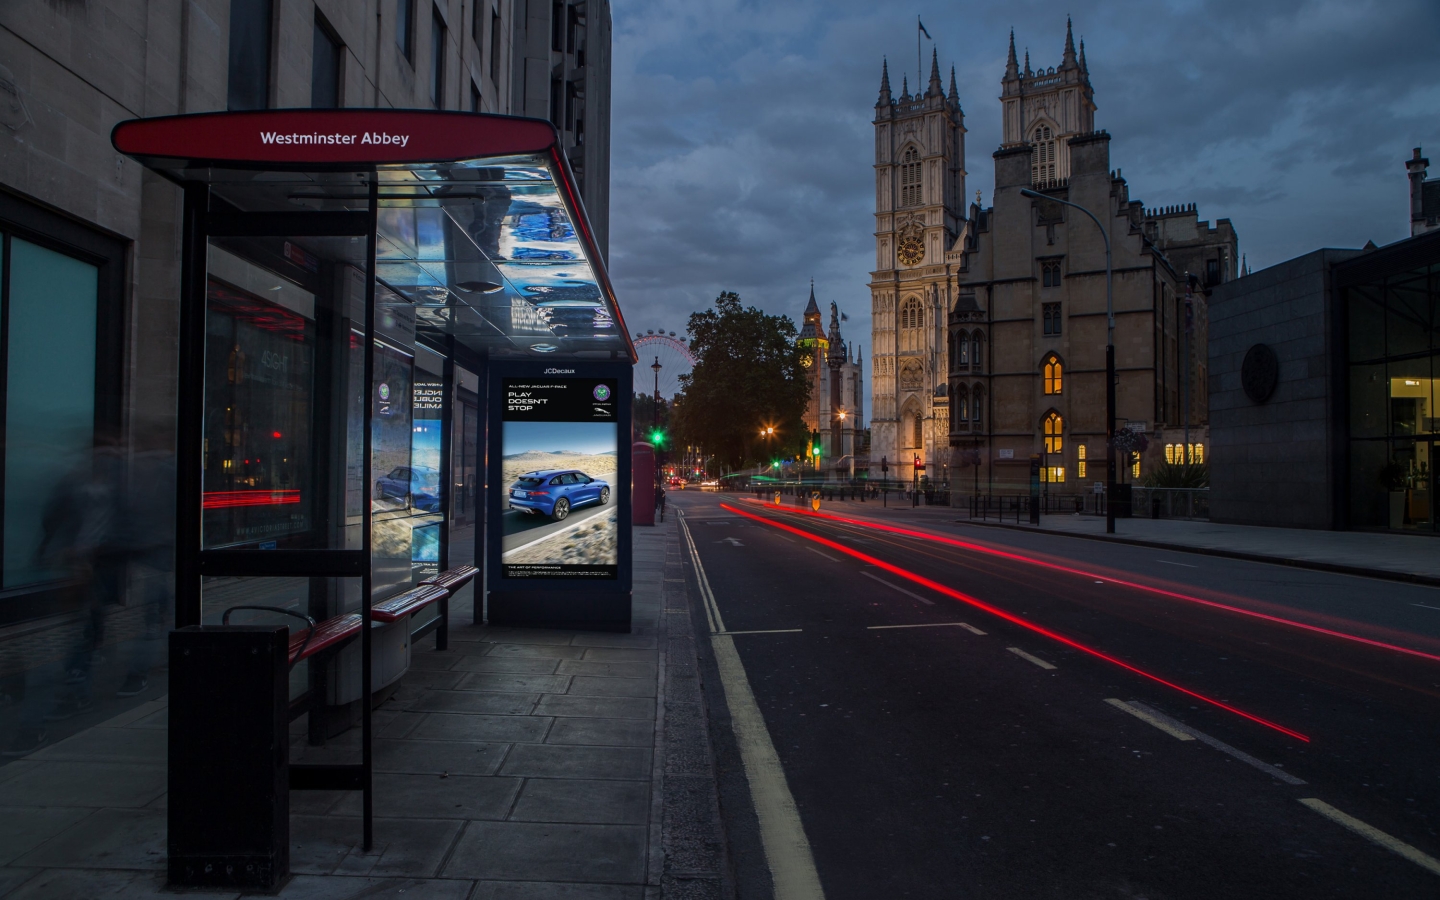 Jaguar digital bus shelter near the Westminster Abbey in London